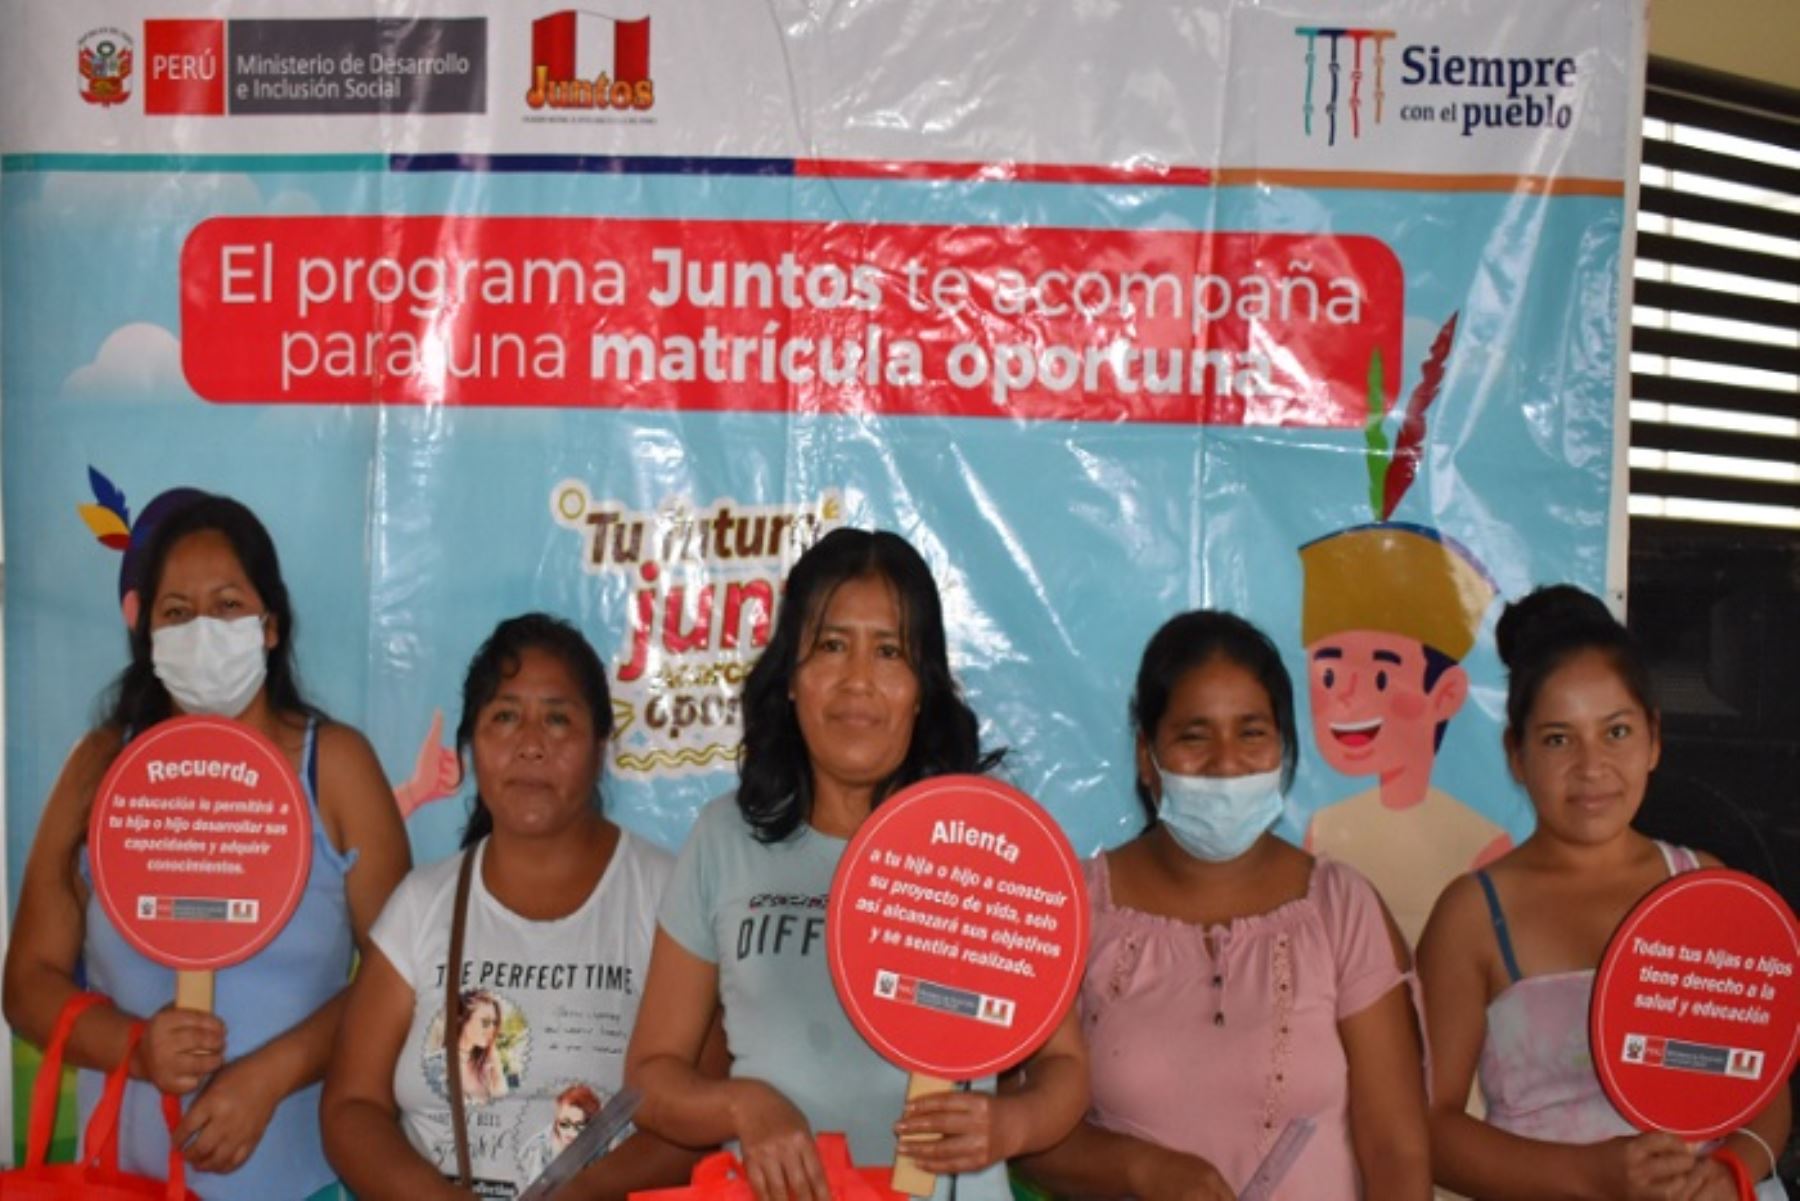 Campaña “Matrícula extemporánea” de Juntos combatirá deserción escolar en San Martín